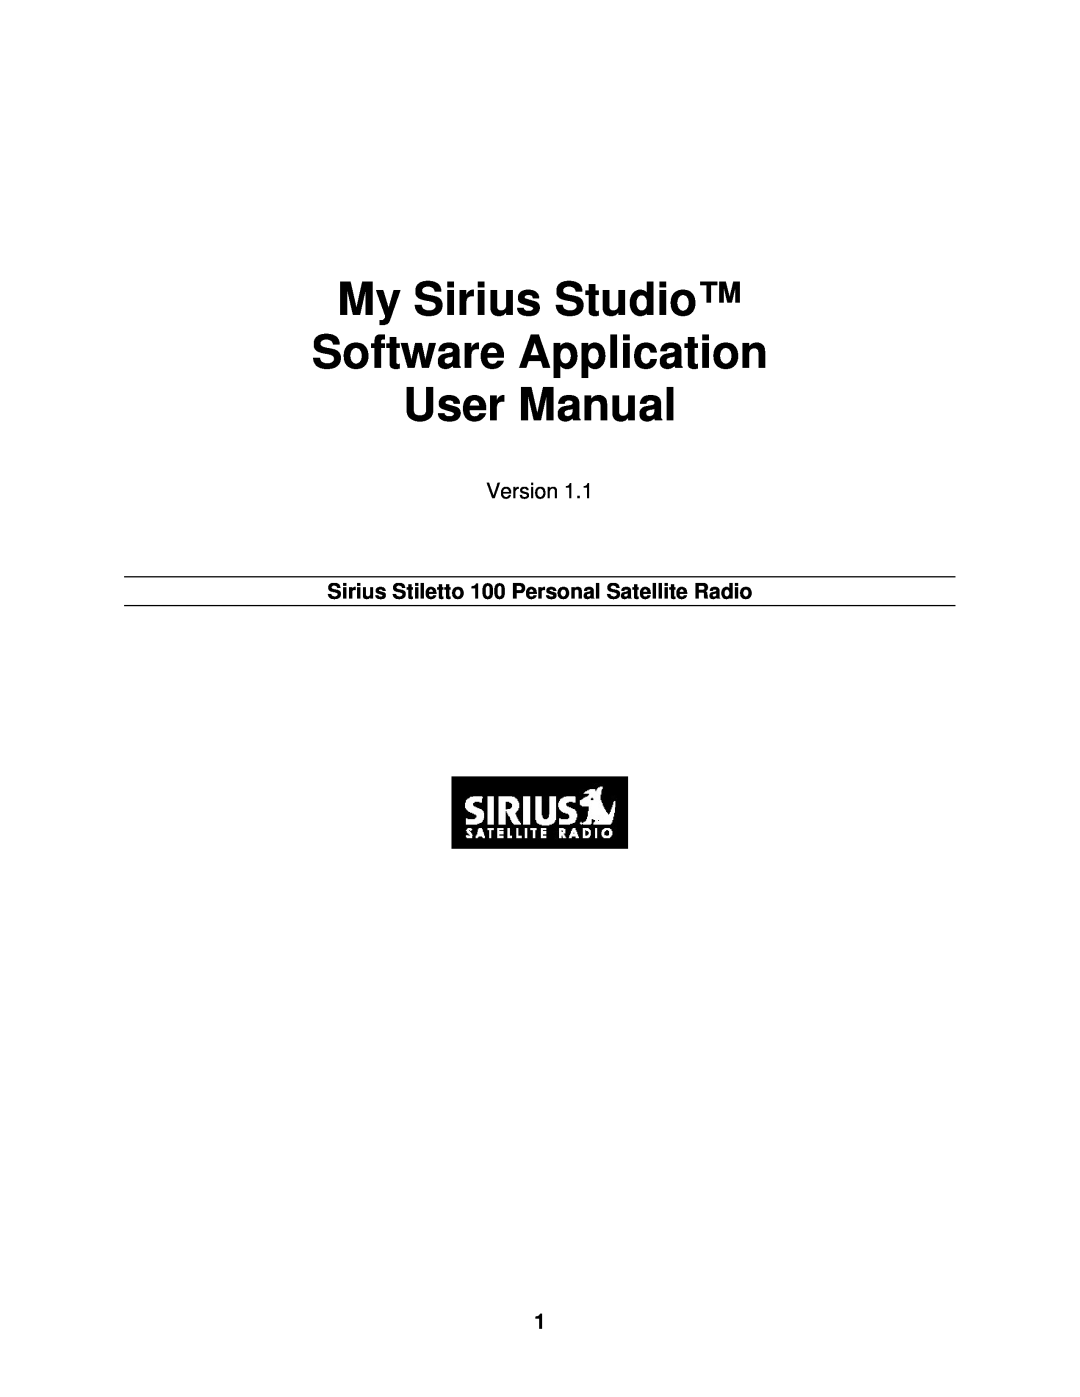 Sirius Satellite Radio Sirius Stiletto 100 Personal Satellite Radio, My Sirius Studio Software Application User Manual 